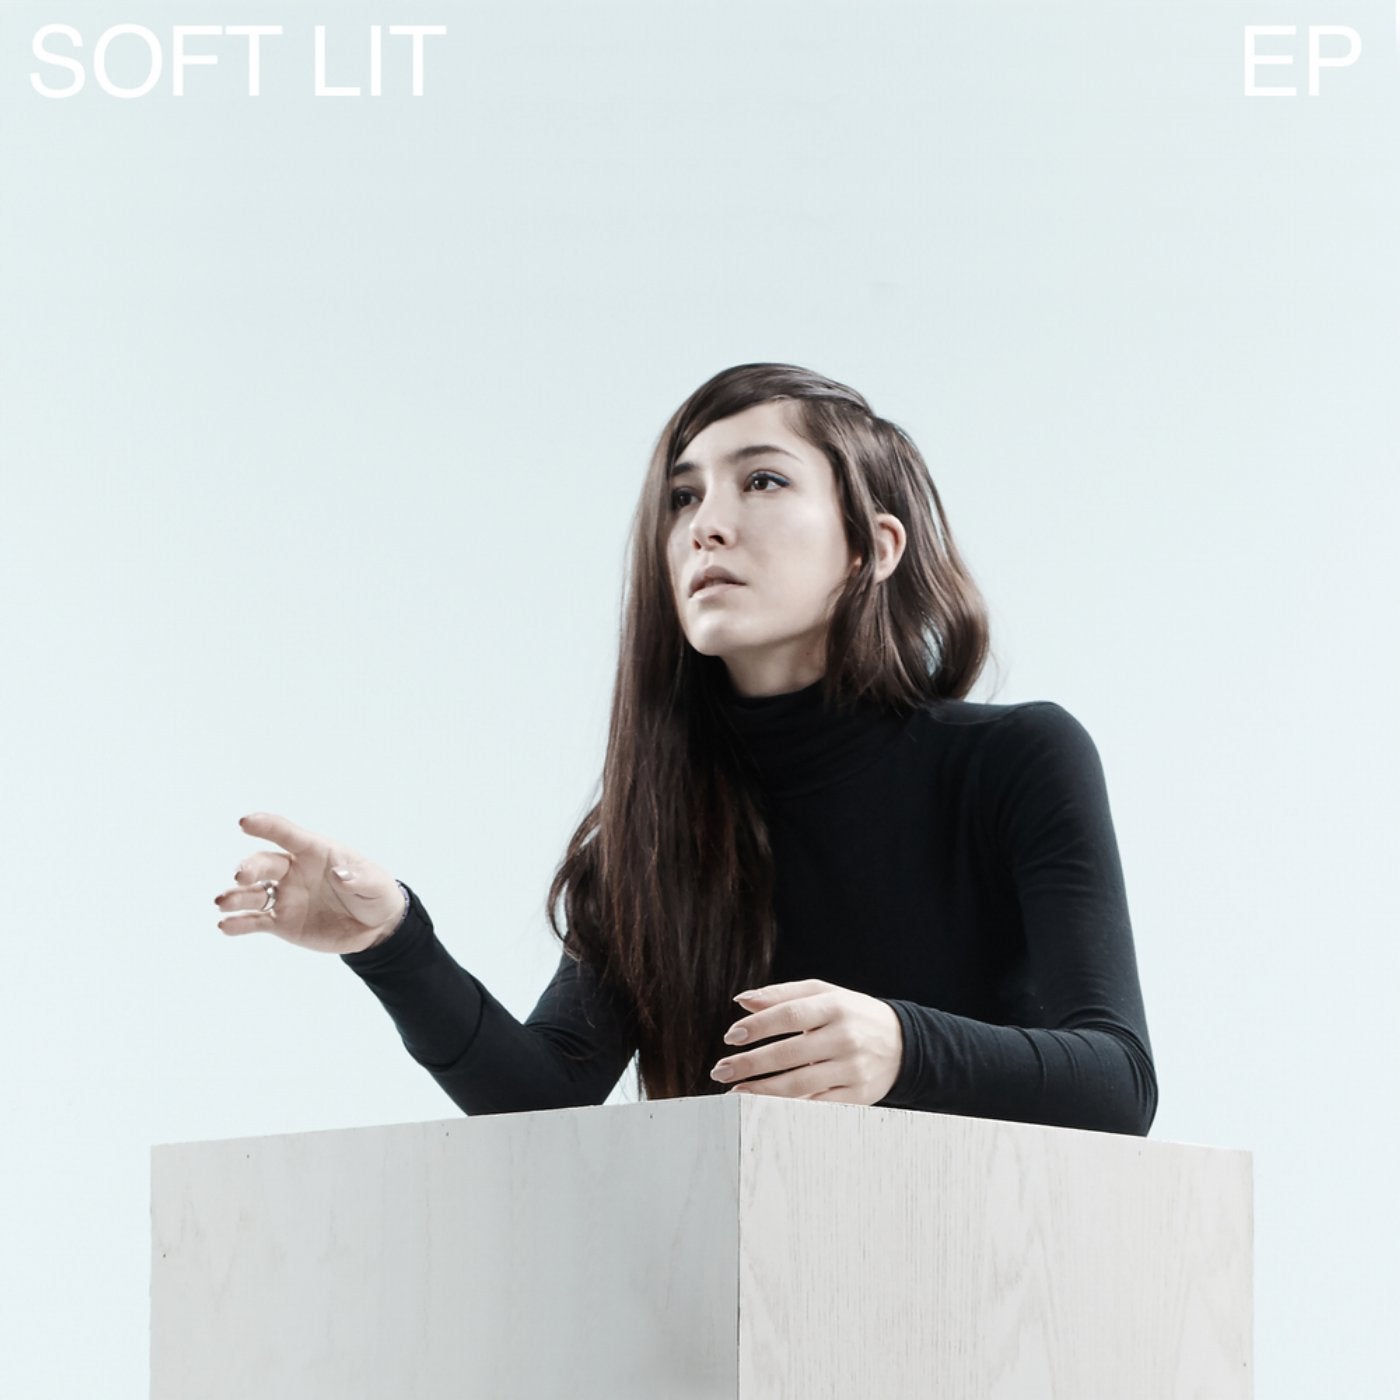 Soft Lit - EP